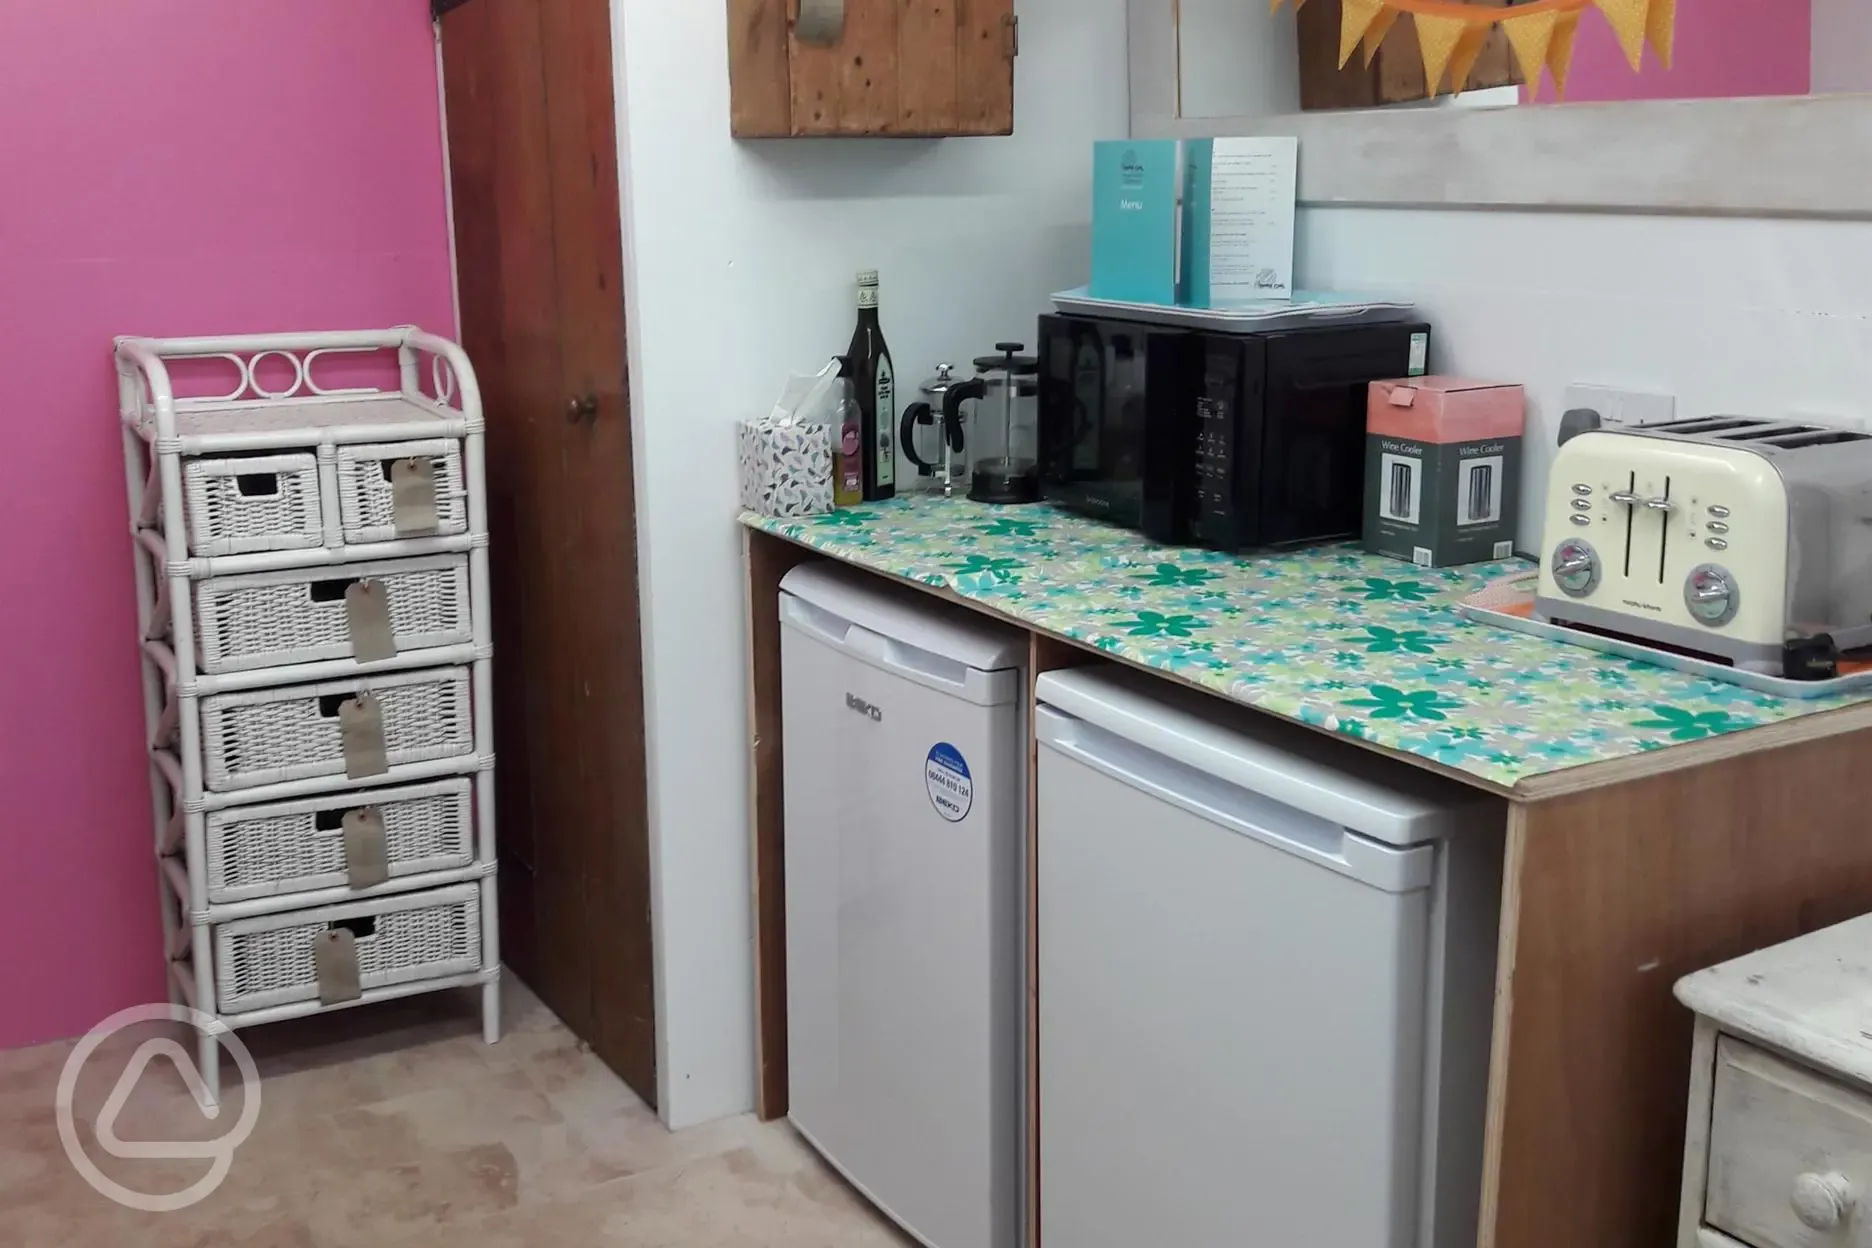 Utility room with sinks, fridges, toaster, kettle etc